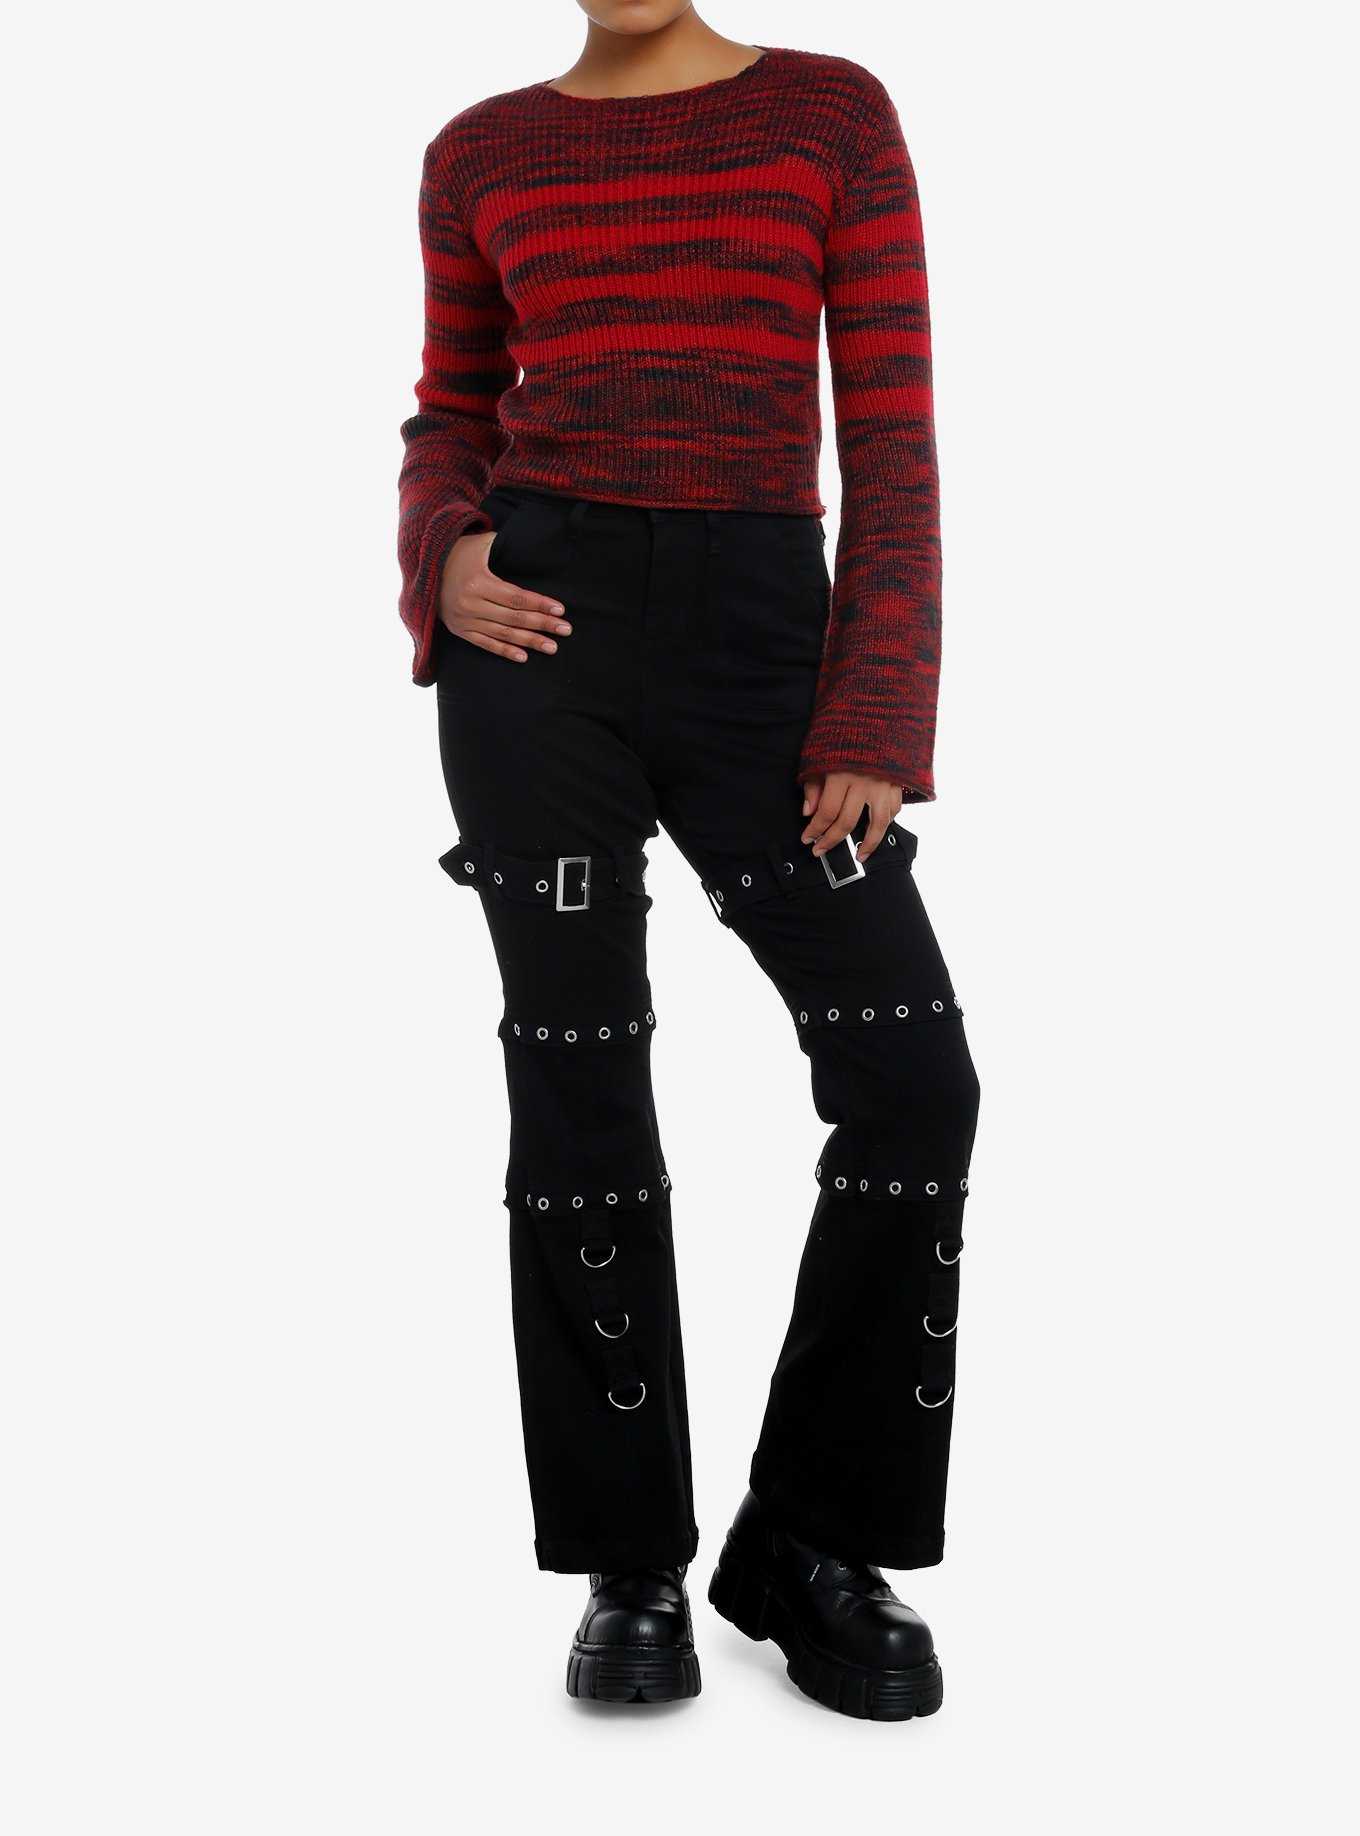 Social Collision Black & Red Stripe Girls Crop Sweater, , hi-res